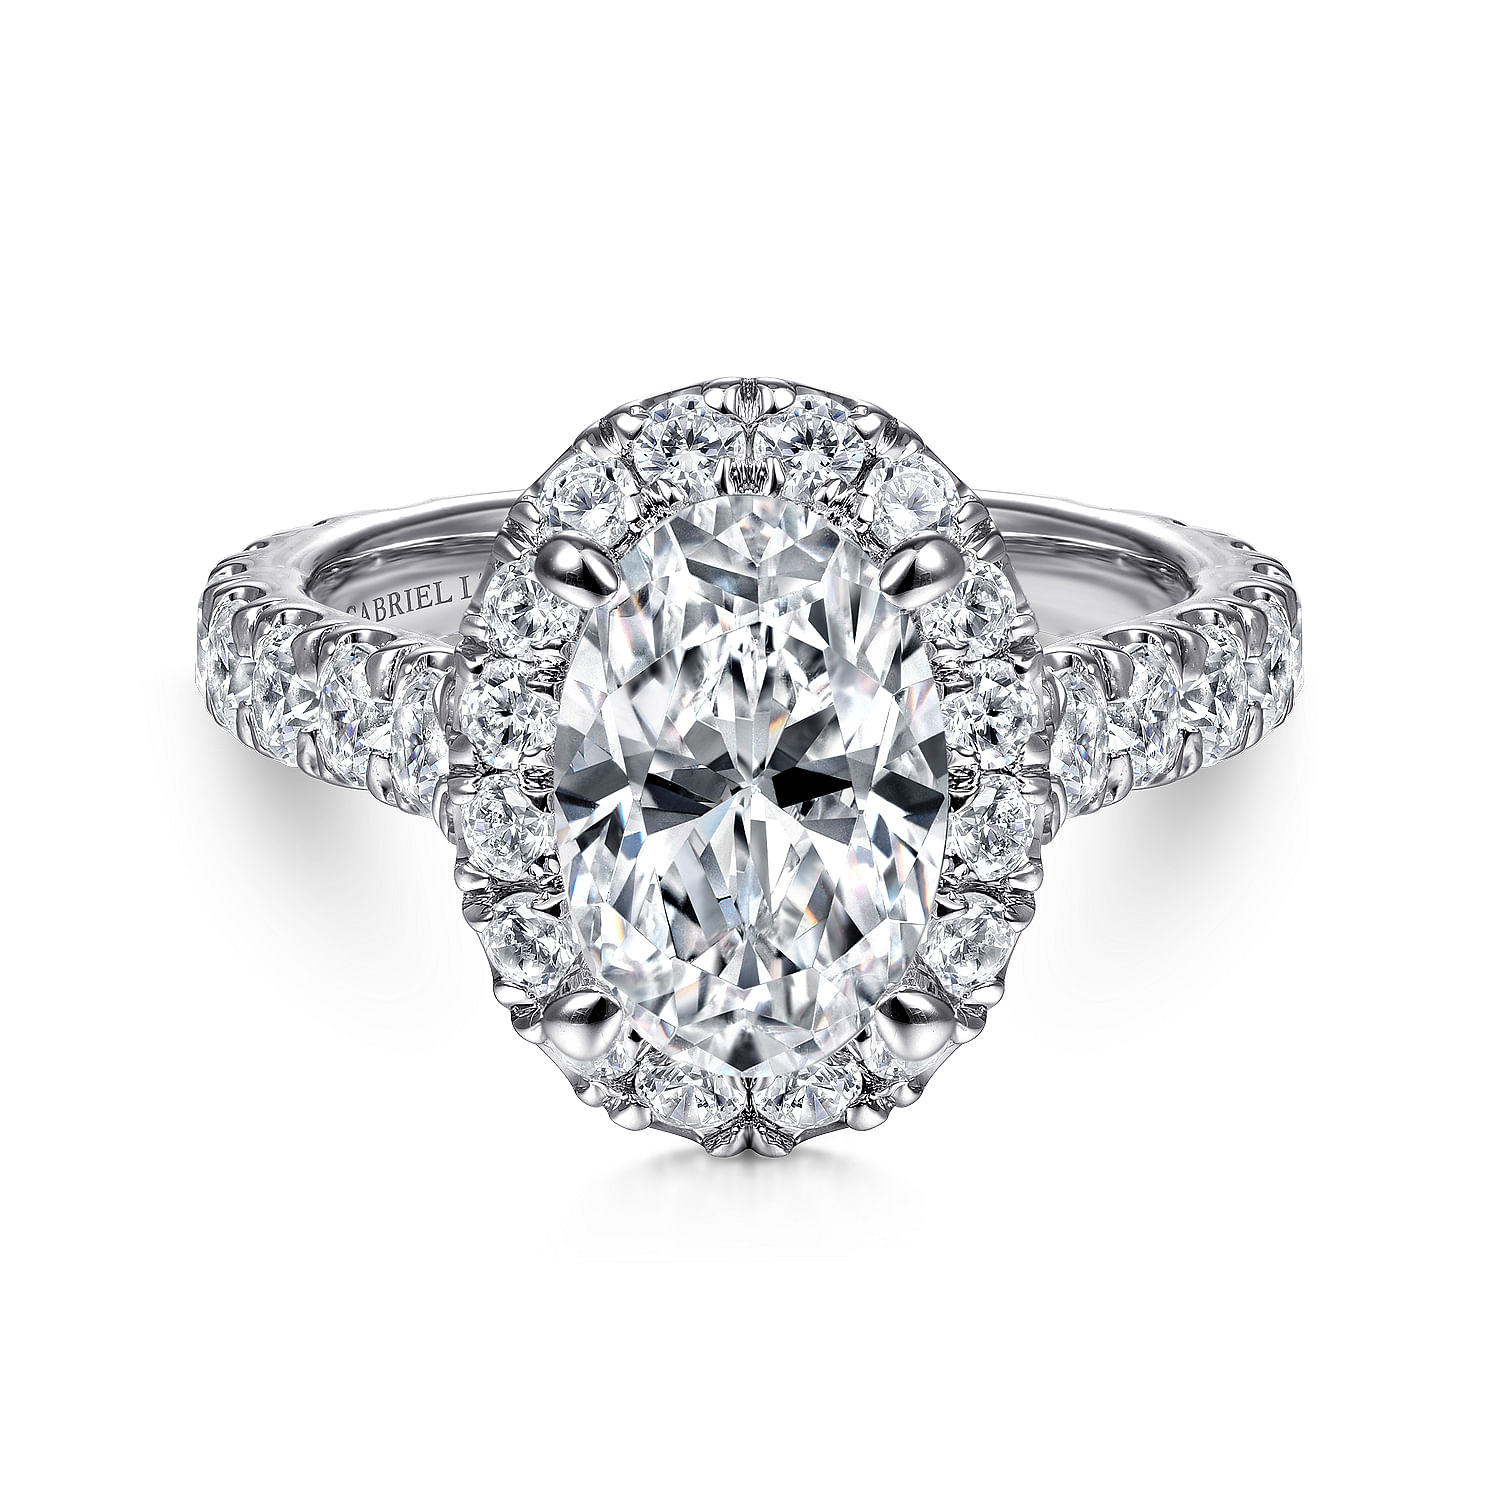 Amy---18K-White-Gold-Oval-Halo-Diamond-Engagement-Ring1